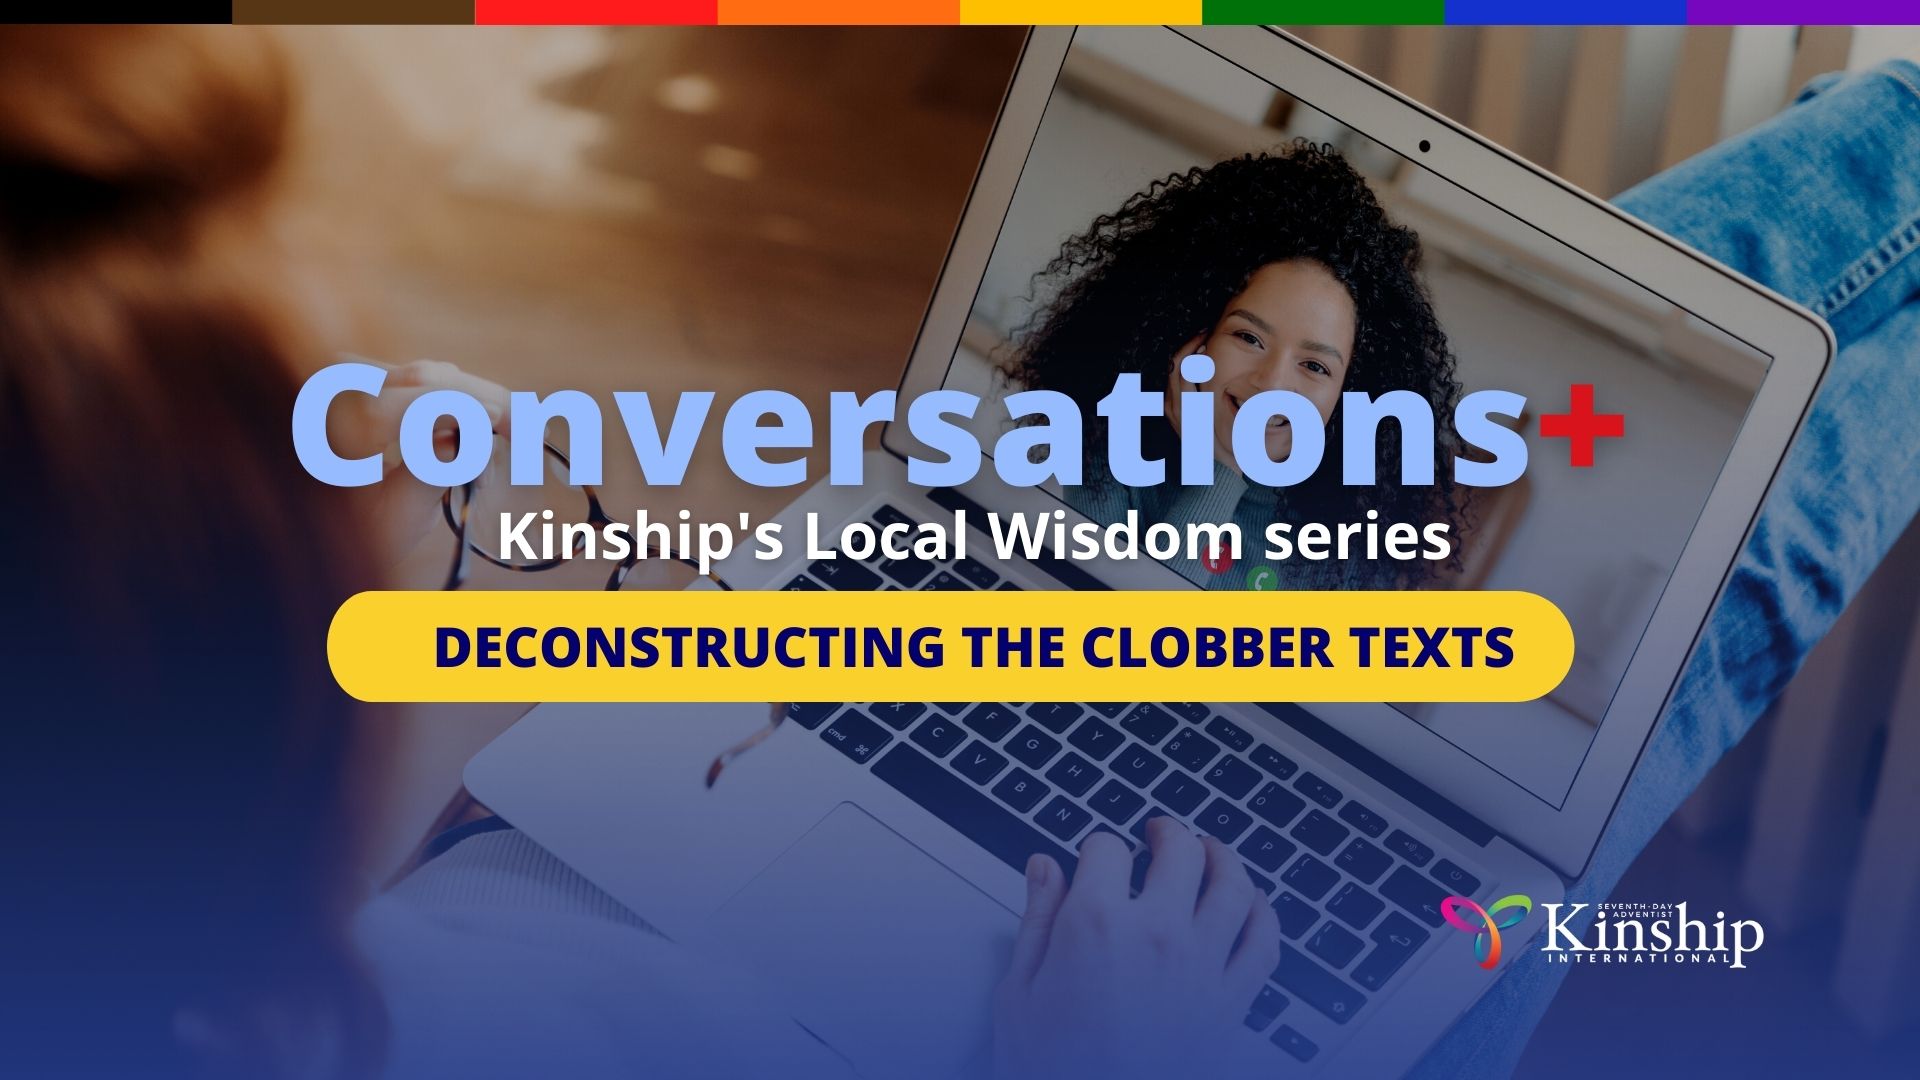 ConversationsDeconstructing Facebook Event Cover